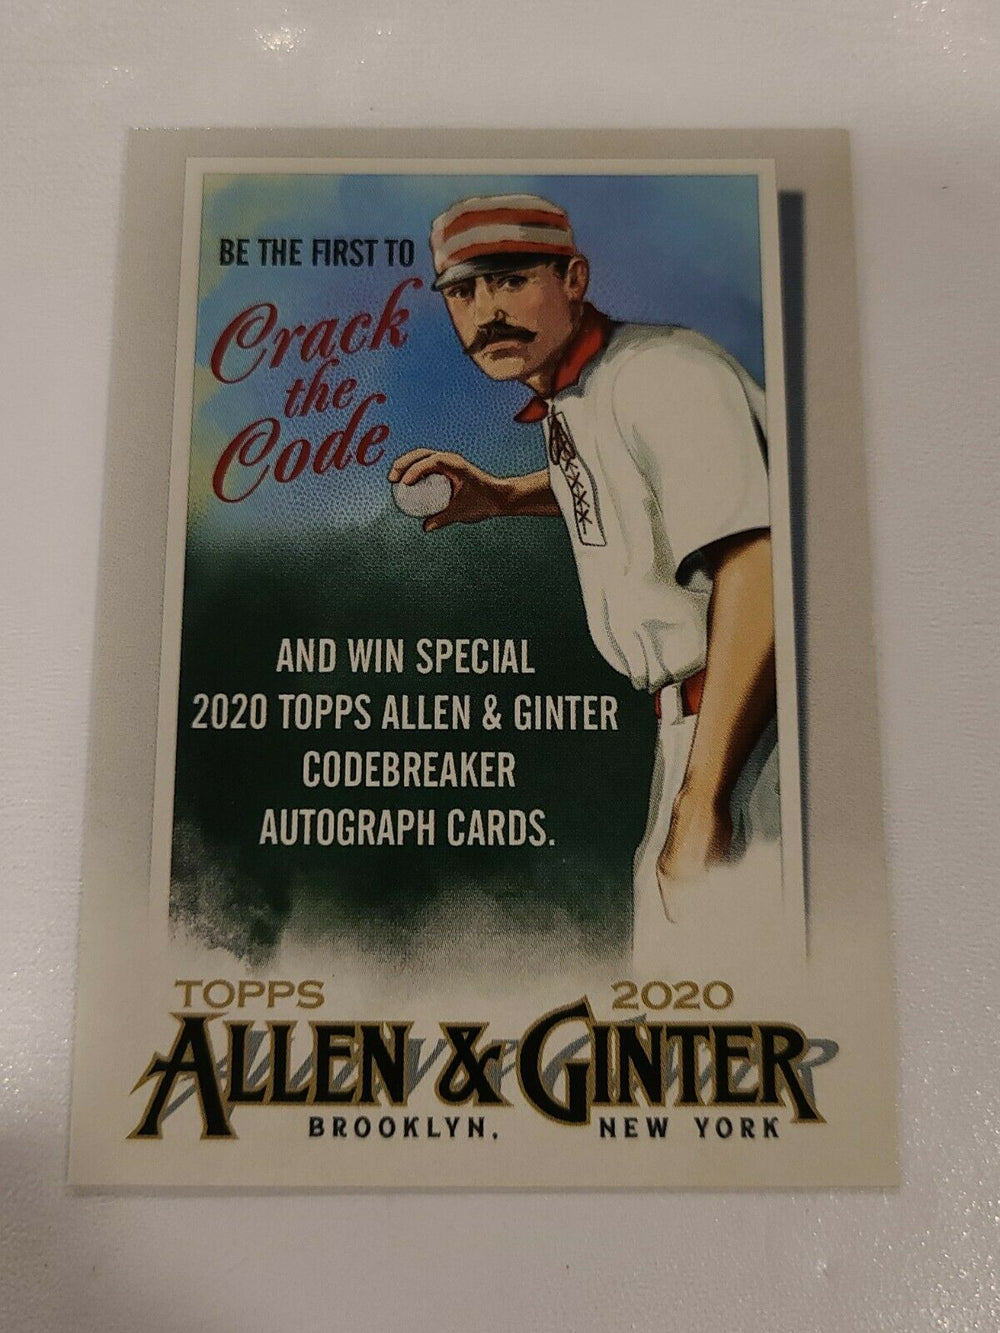 2020 Topps Allen & Ginter Baseball Codebreaker First to Crack the Code